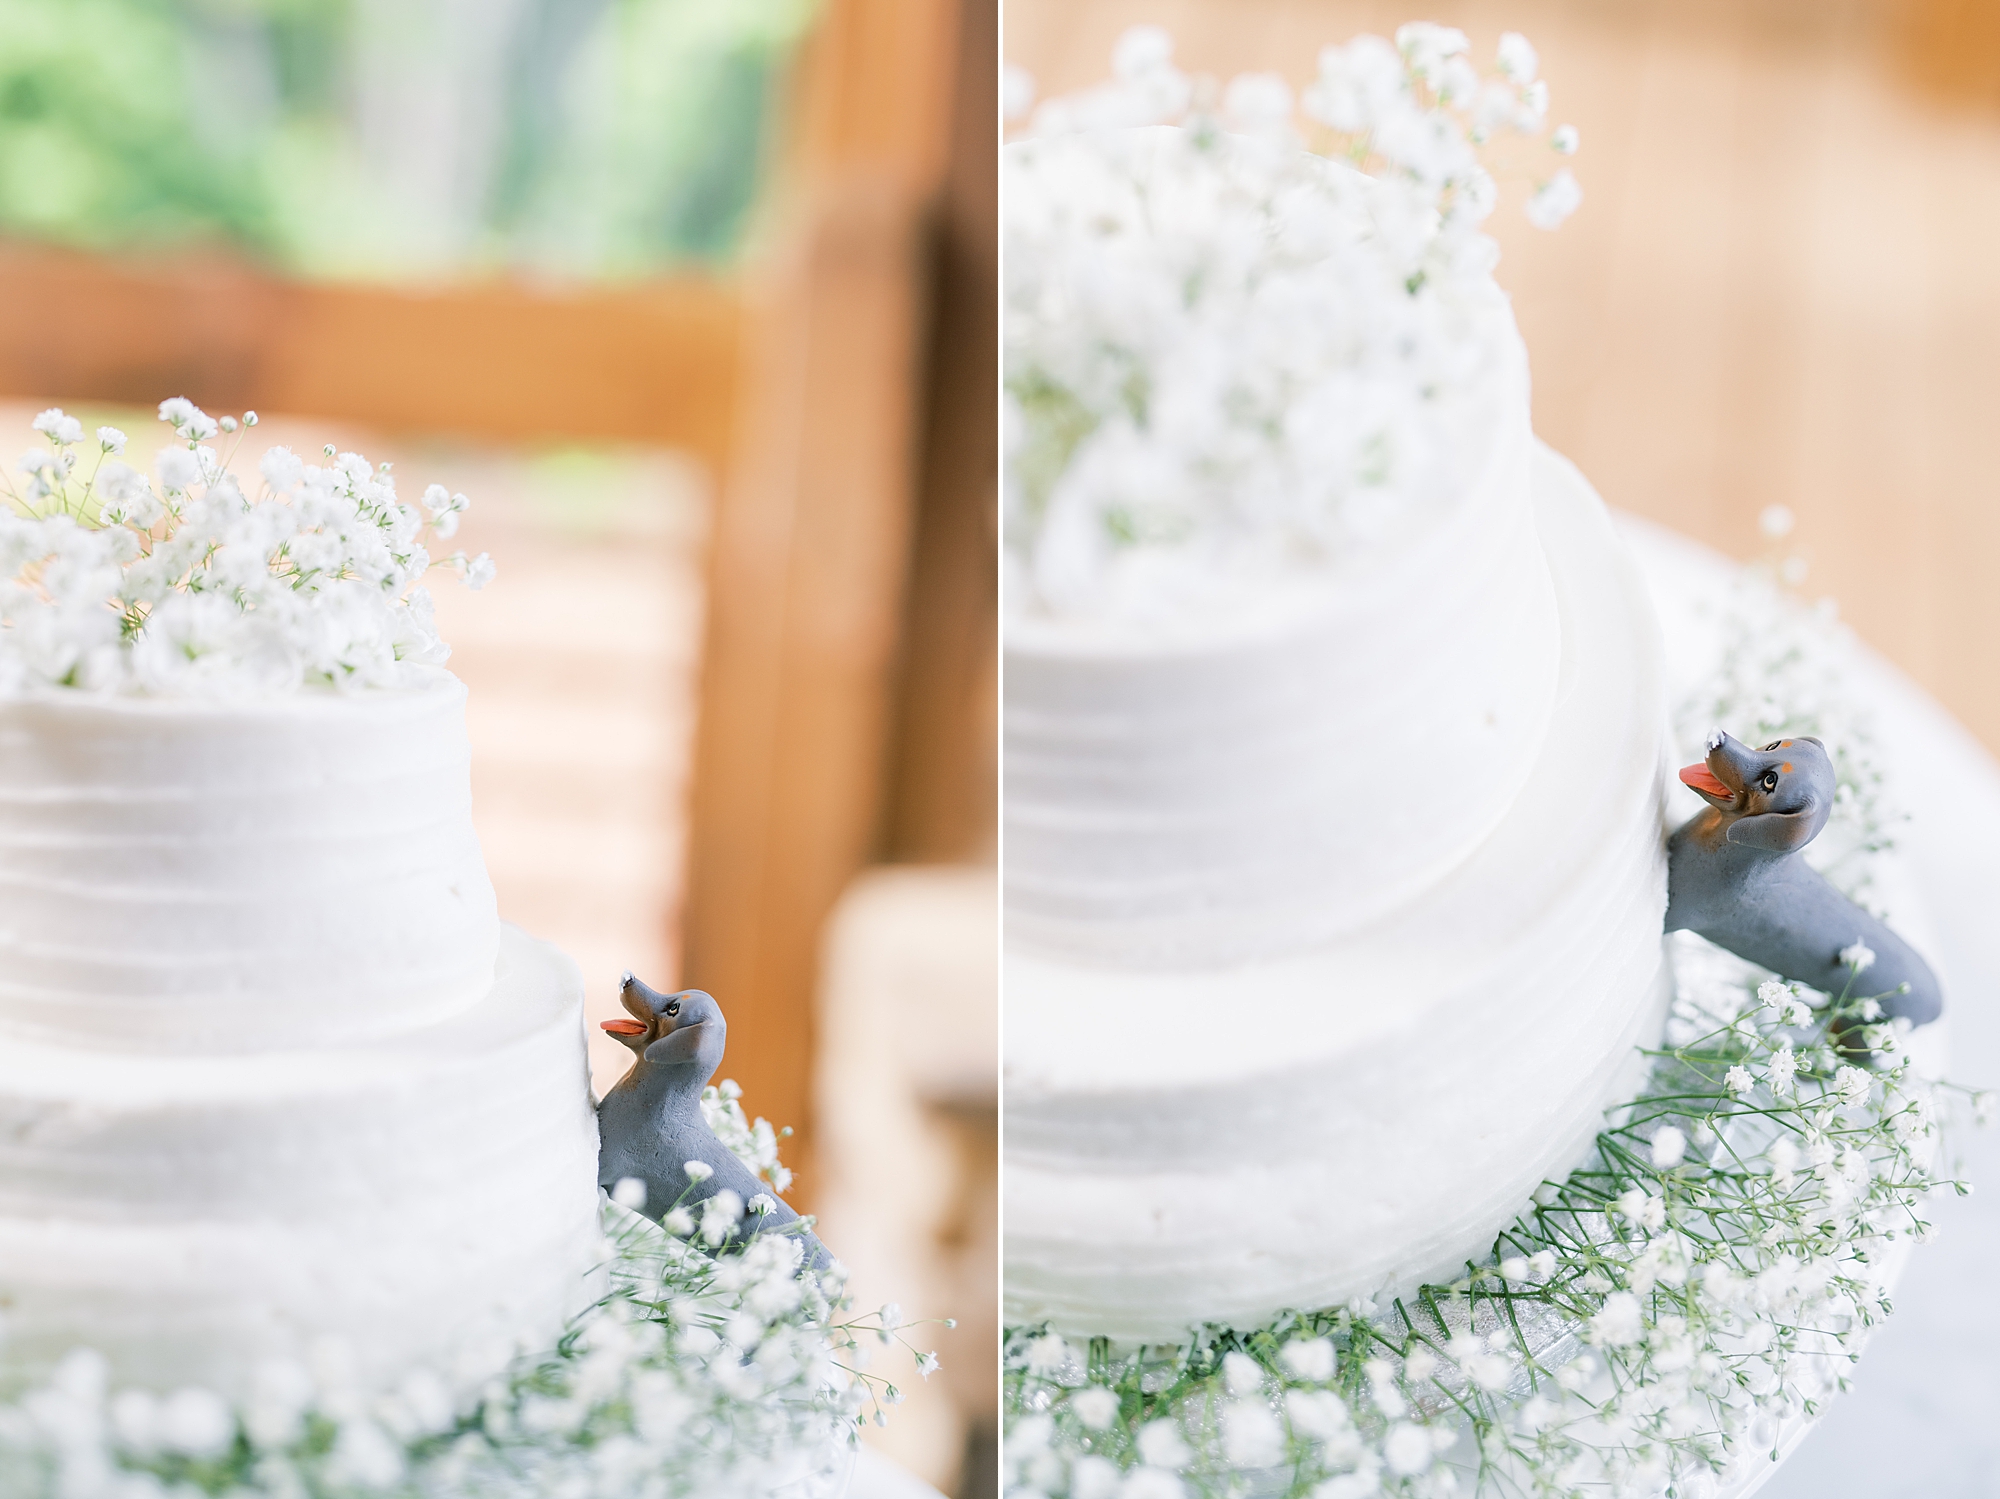 wedding cake with dog figurine 